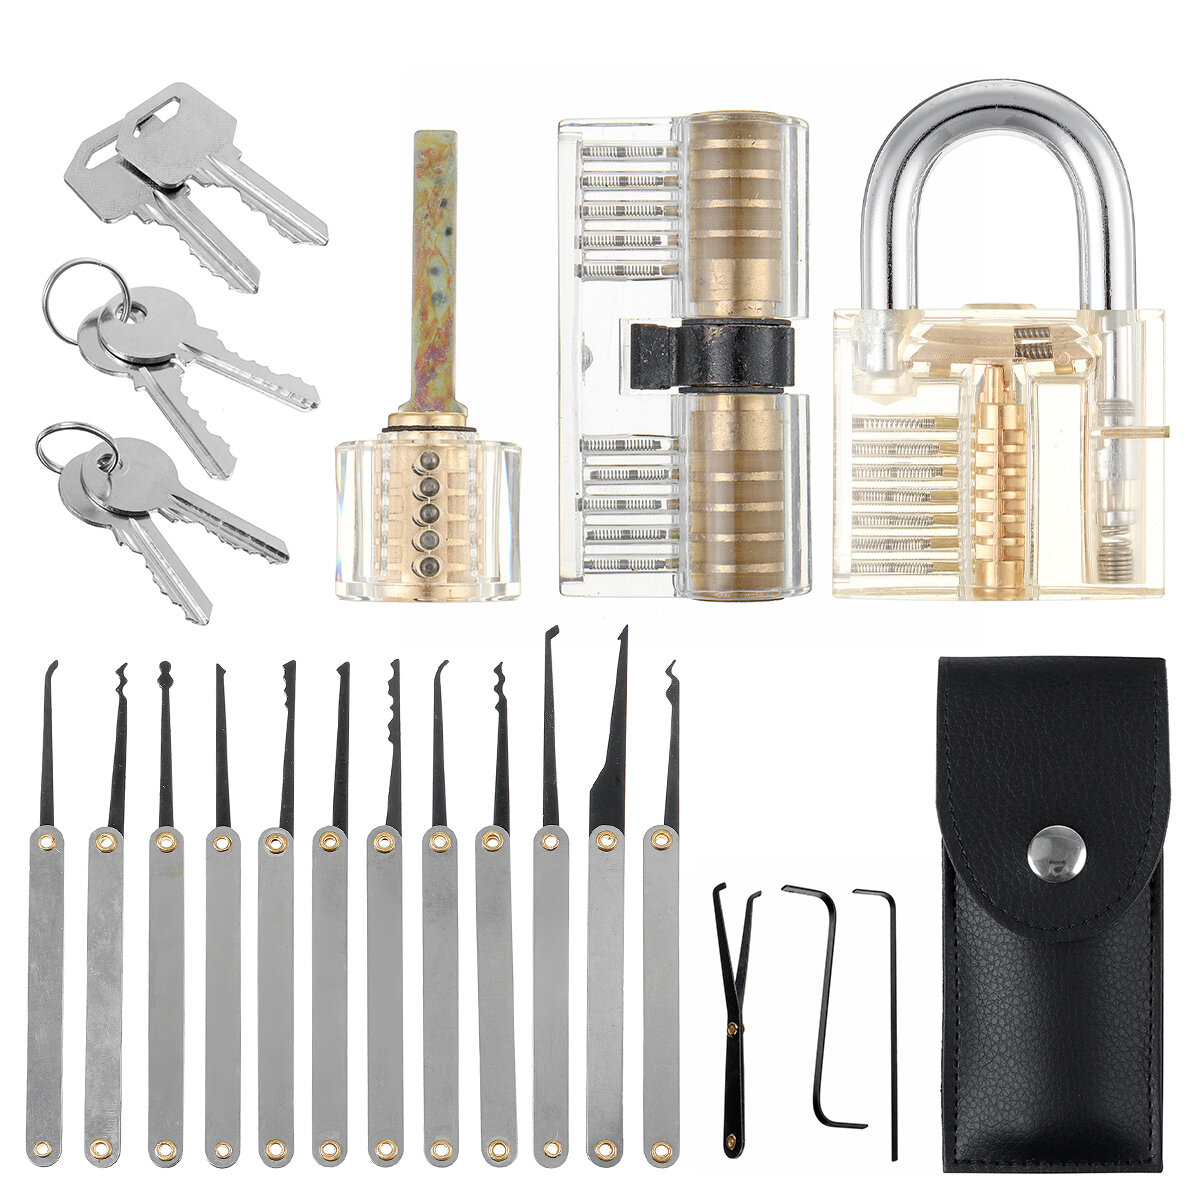 LOCKSMITHOBD 25PCS Unlocking Locksmith Practice Lock Pick Key Extractor Padlock Lockpick Tool Kits